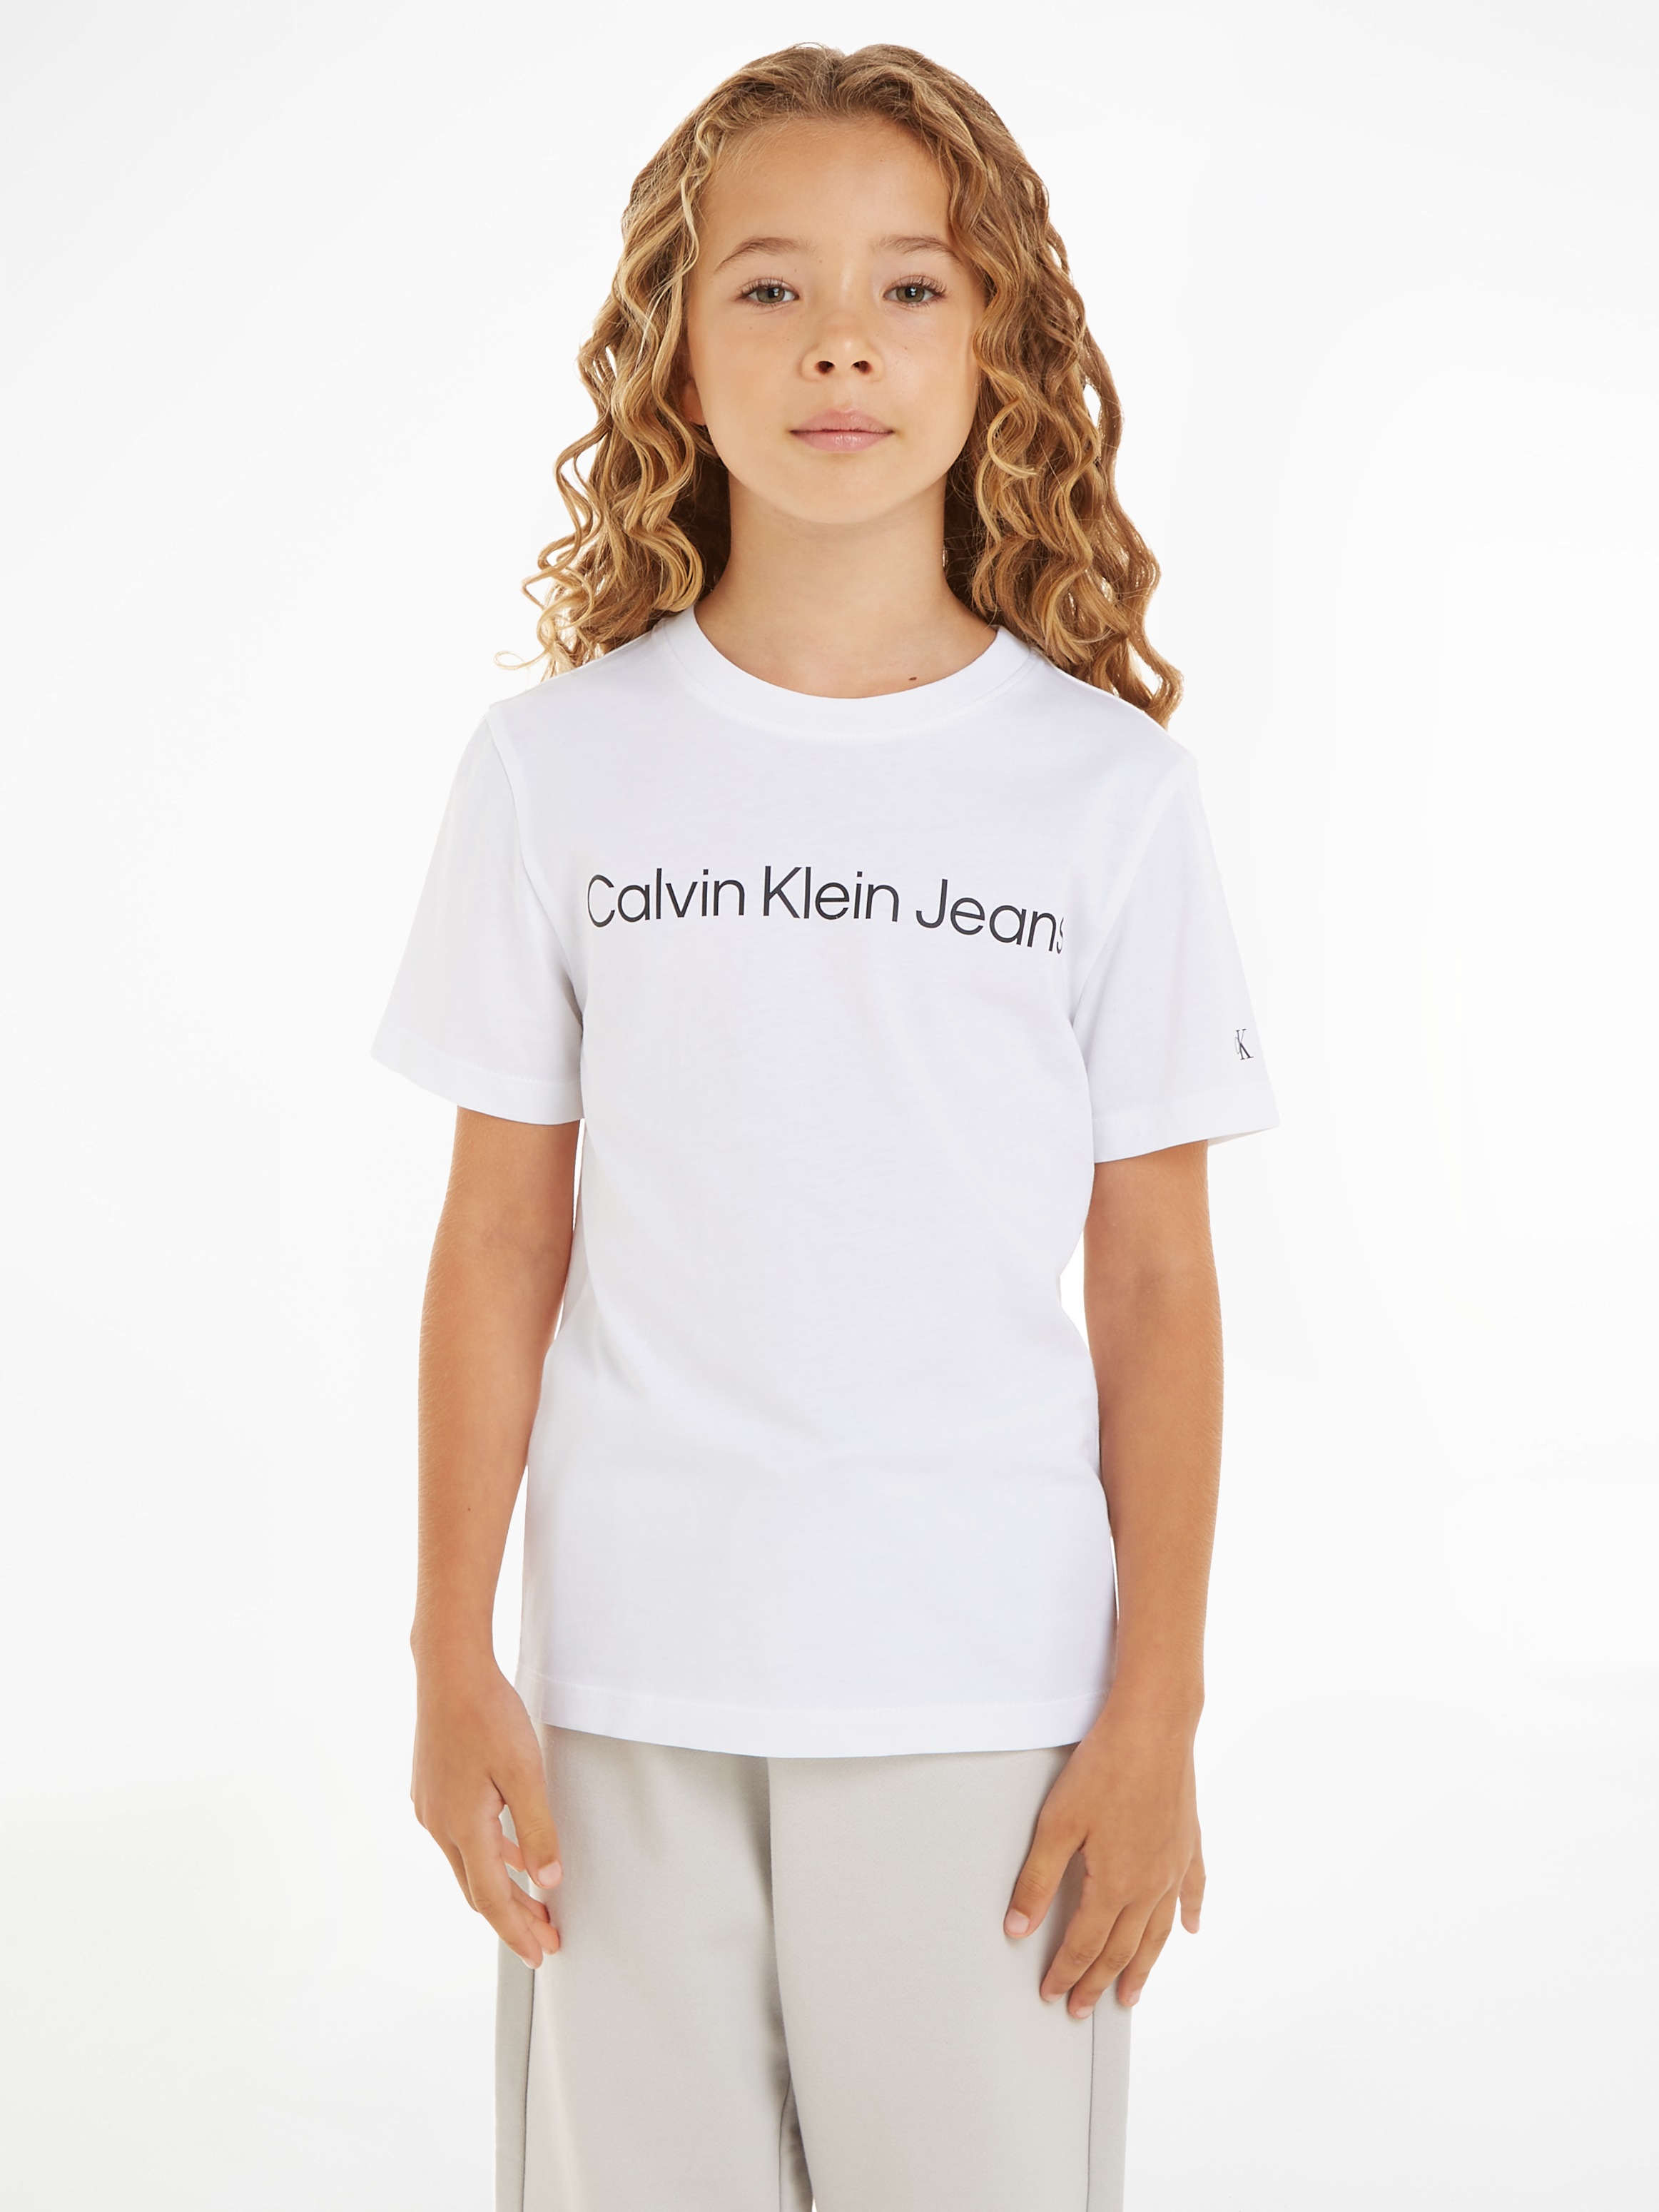 SS mit BAUR T-SHIRT«, LOGO Black Sweatshirt »INST. Logoschriftzug Jeans | Calvin Friday Klein